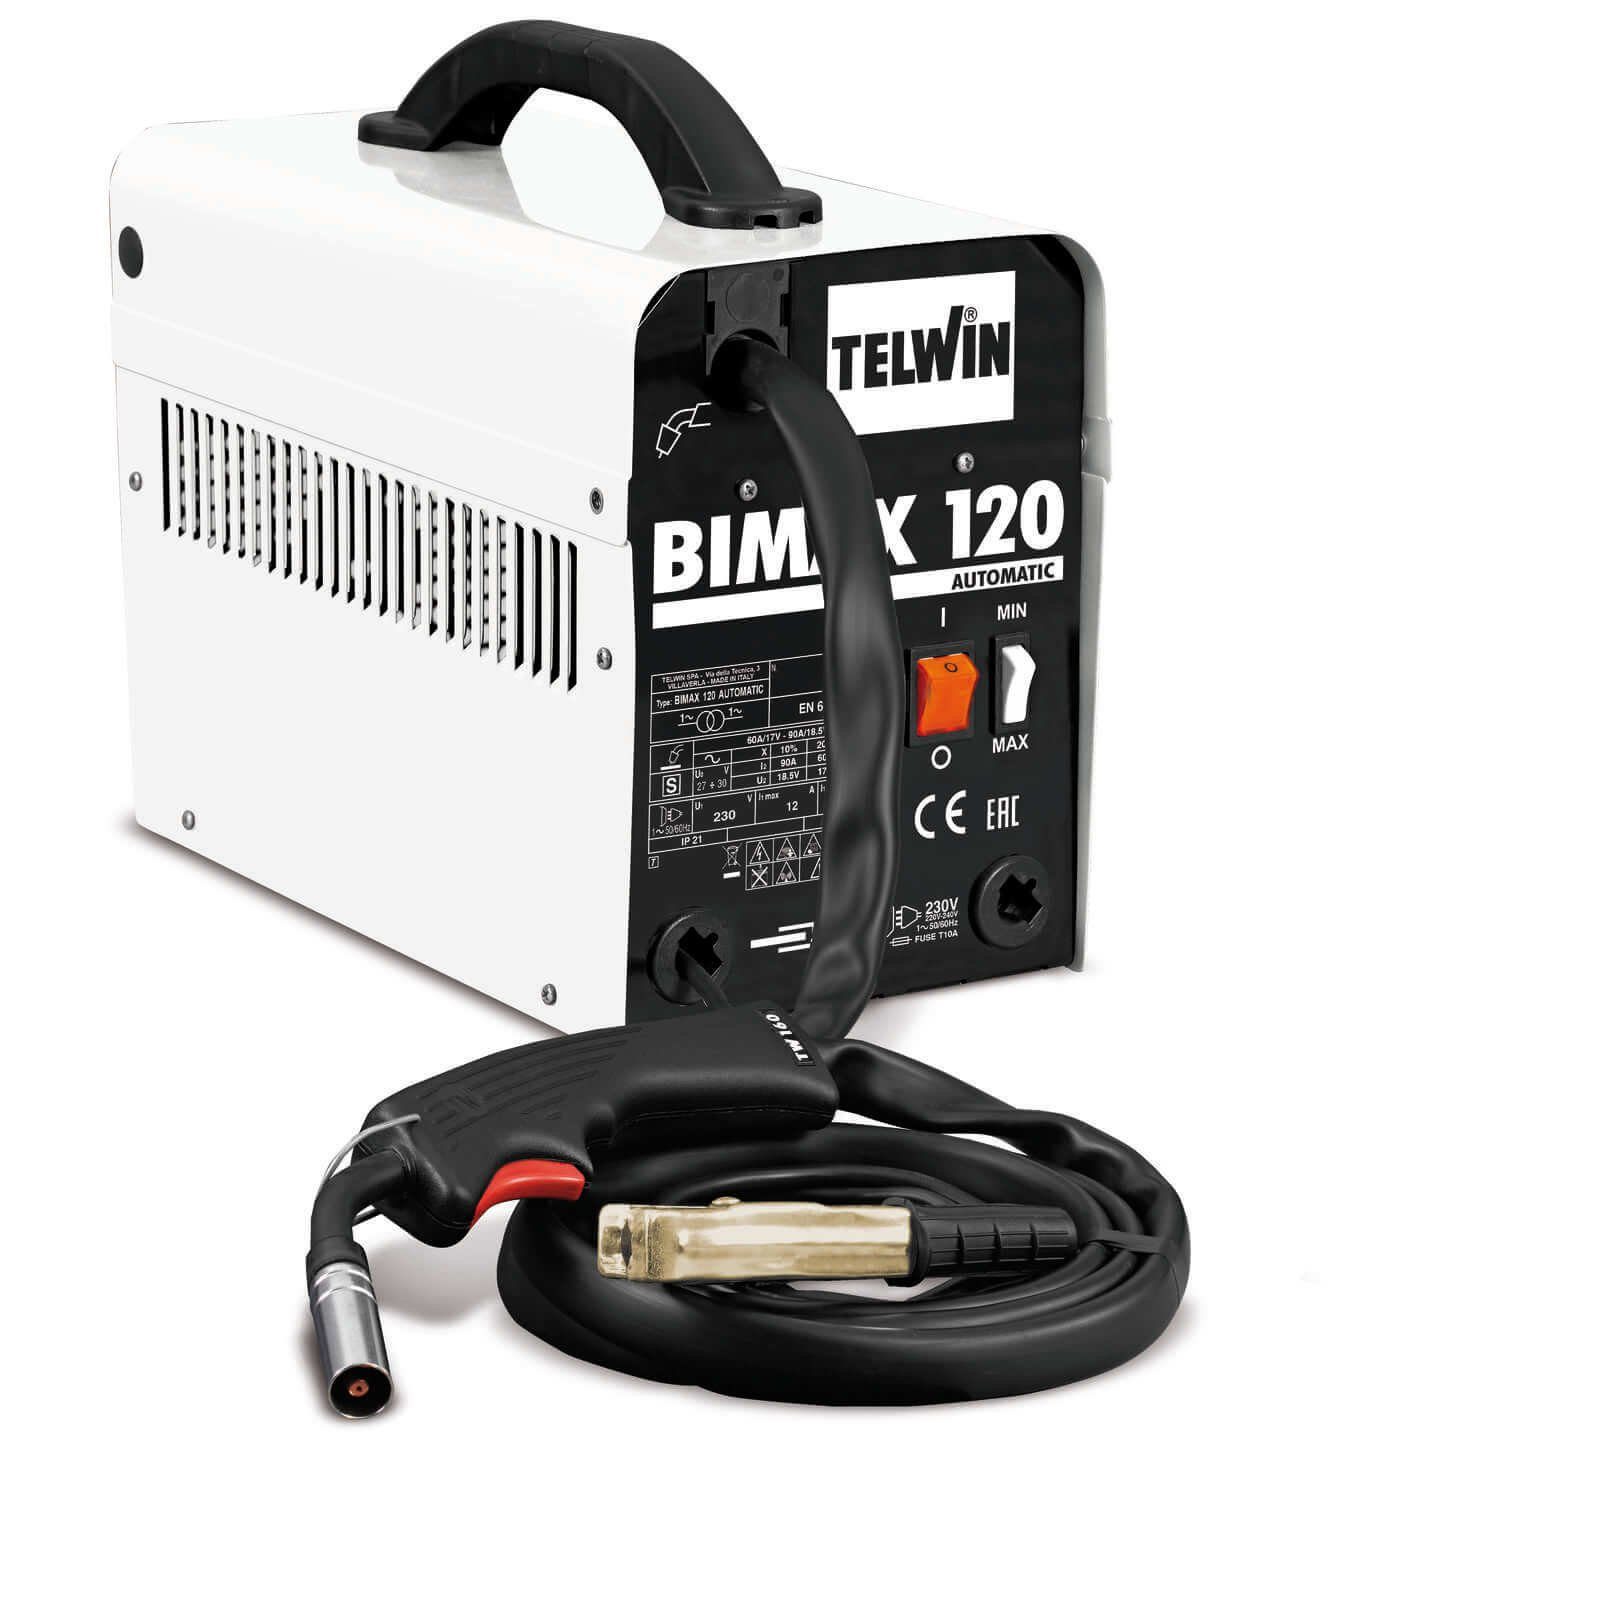 TELWIN Elektroschweißgerät Telwin Schweißinverter BIMAX 120 AUTOMATIC, Fülldraht, Schweißbrenner